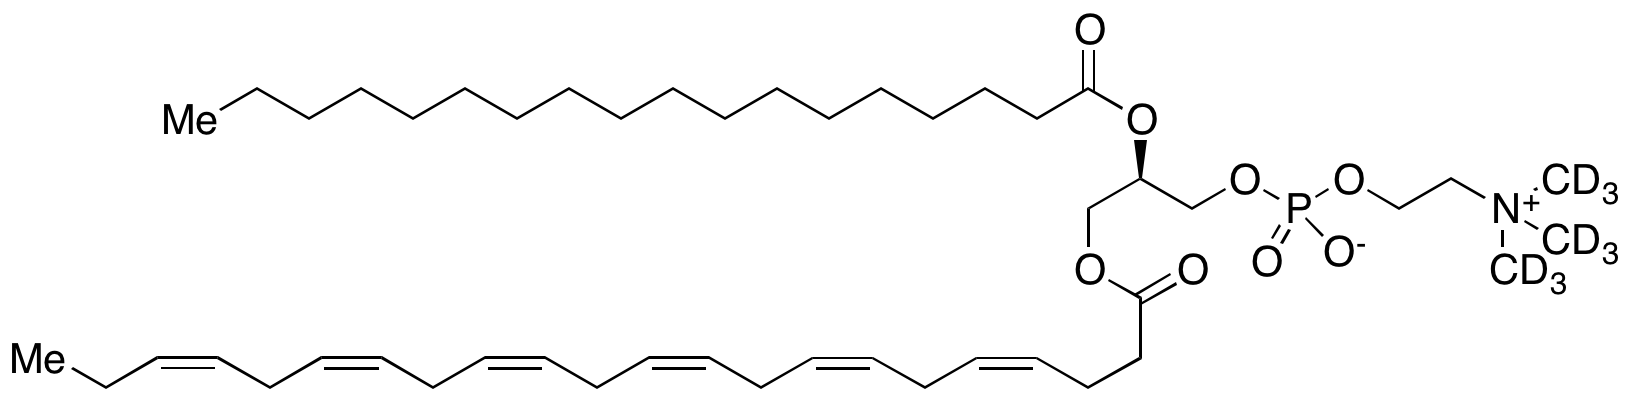 1-Docosahexaenoyl-2-stearoyl-sn-glycero-3-phosphocholine-d<sub>9</sub>